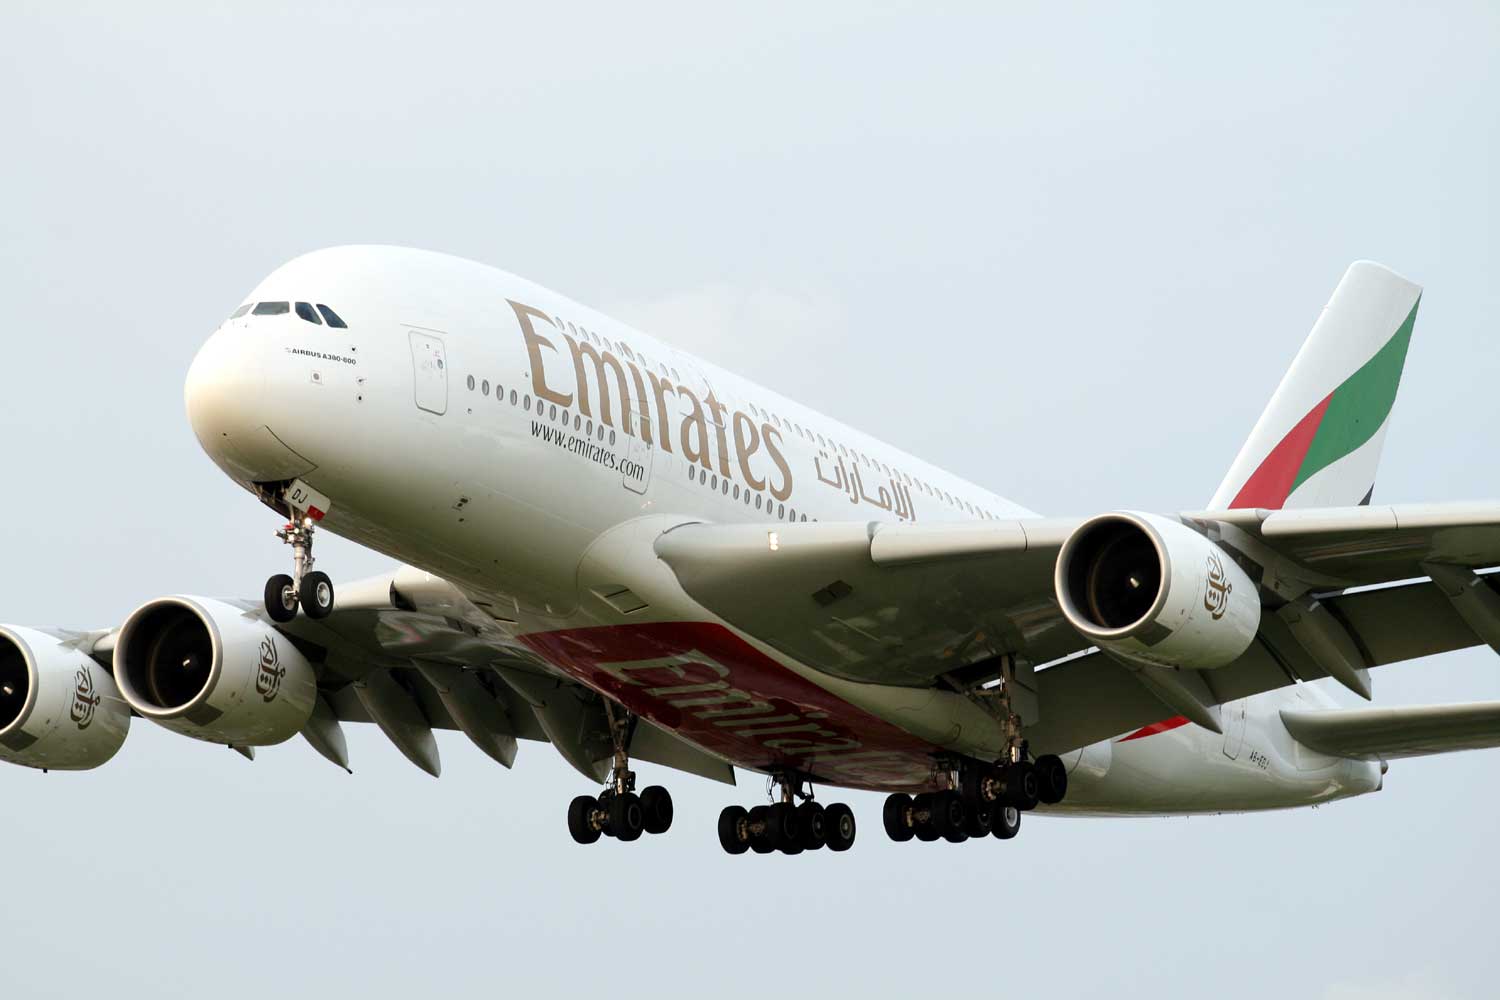 https://www.airportspotting.com/wp-content/uploads/2012/03/EmiratesA380.jpg